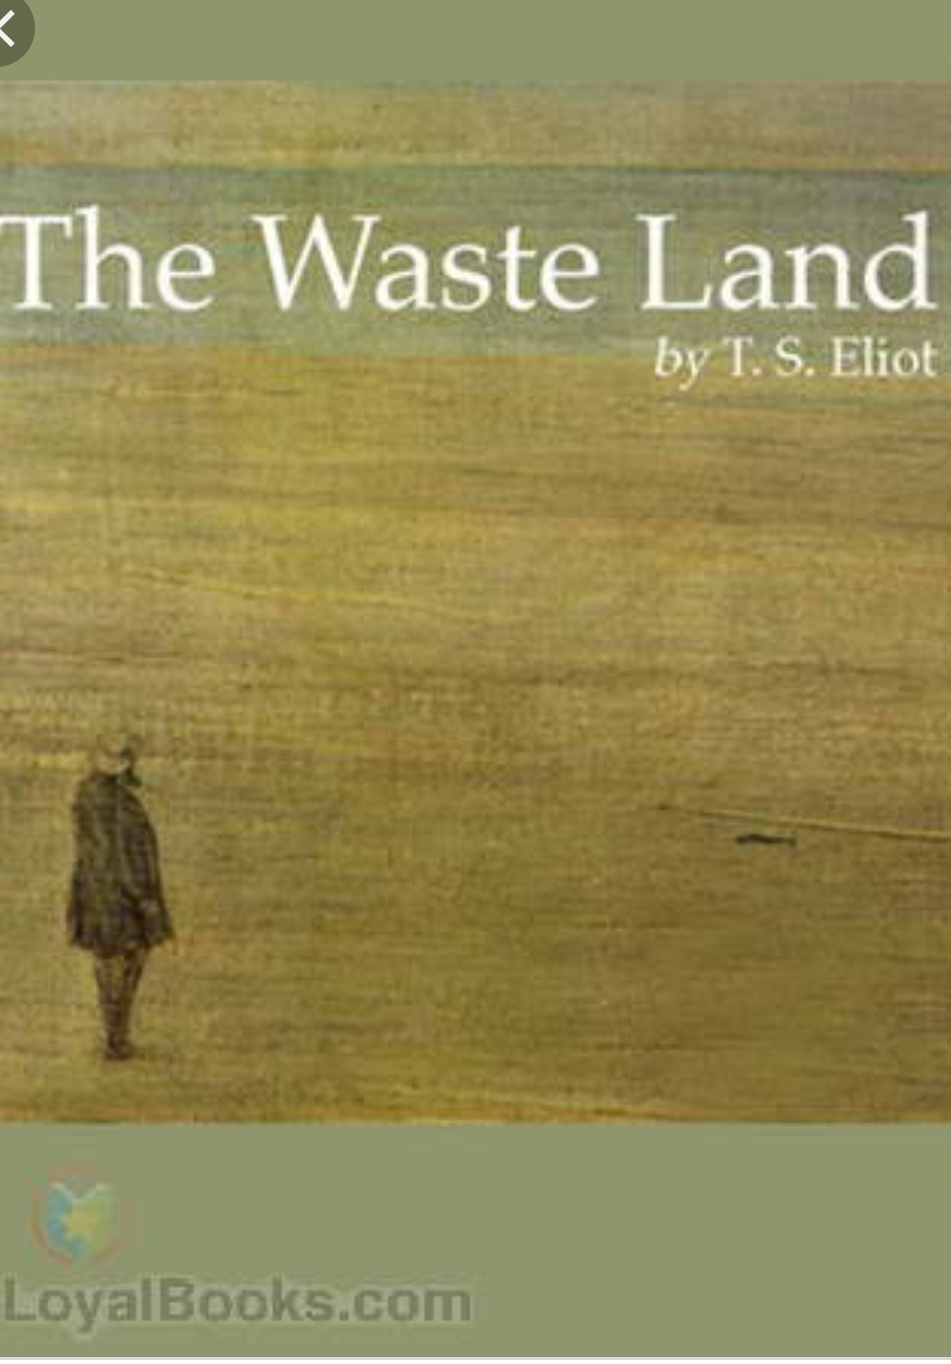 Полый человек книга. The waste Land by t.s. Eliot.